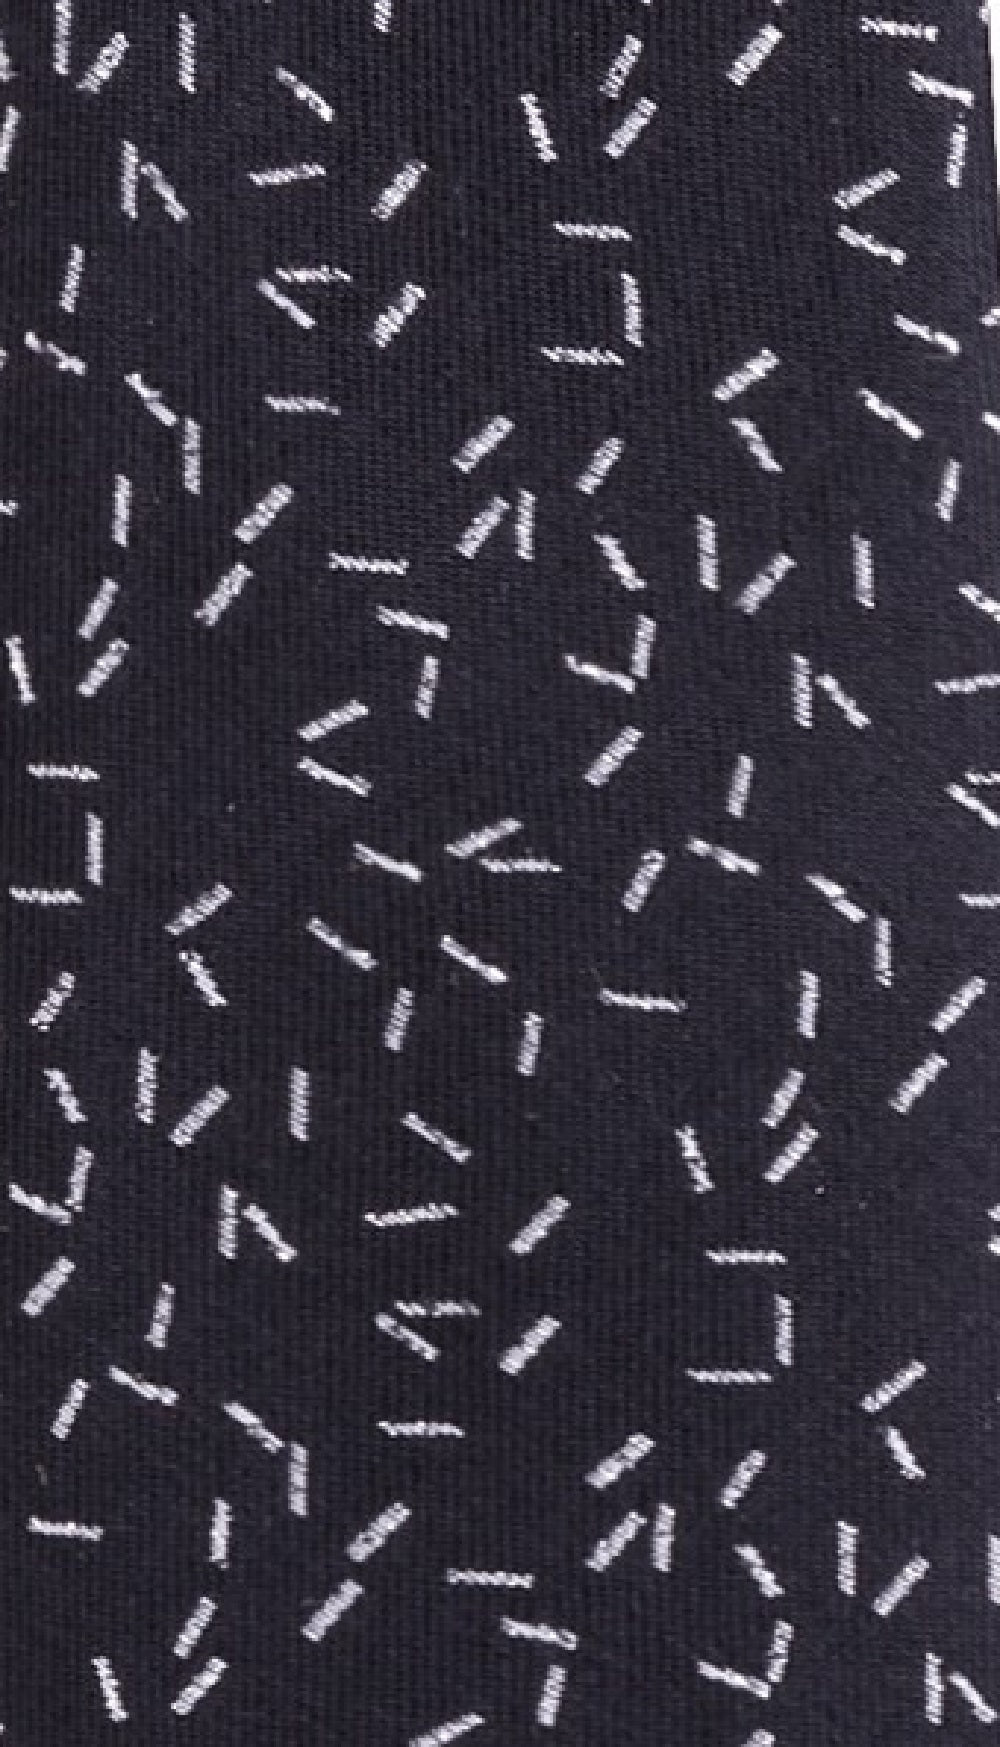 Calvin Klein Men's Skinny Scattered Dashes Tie Black One Size